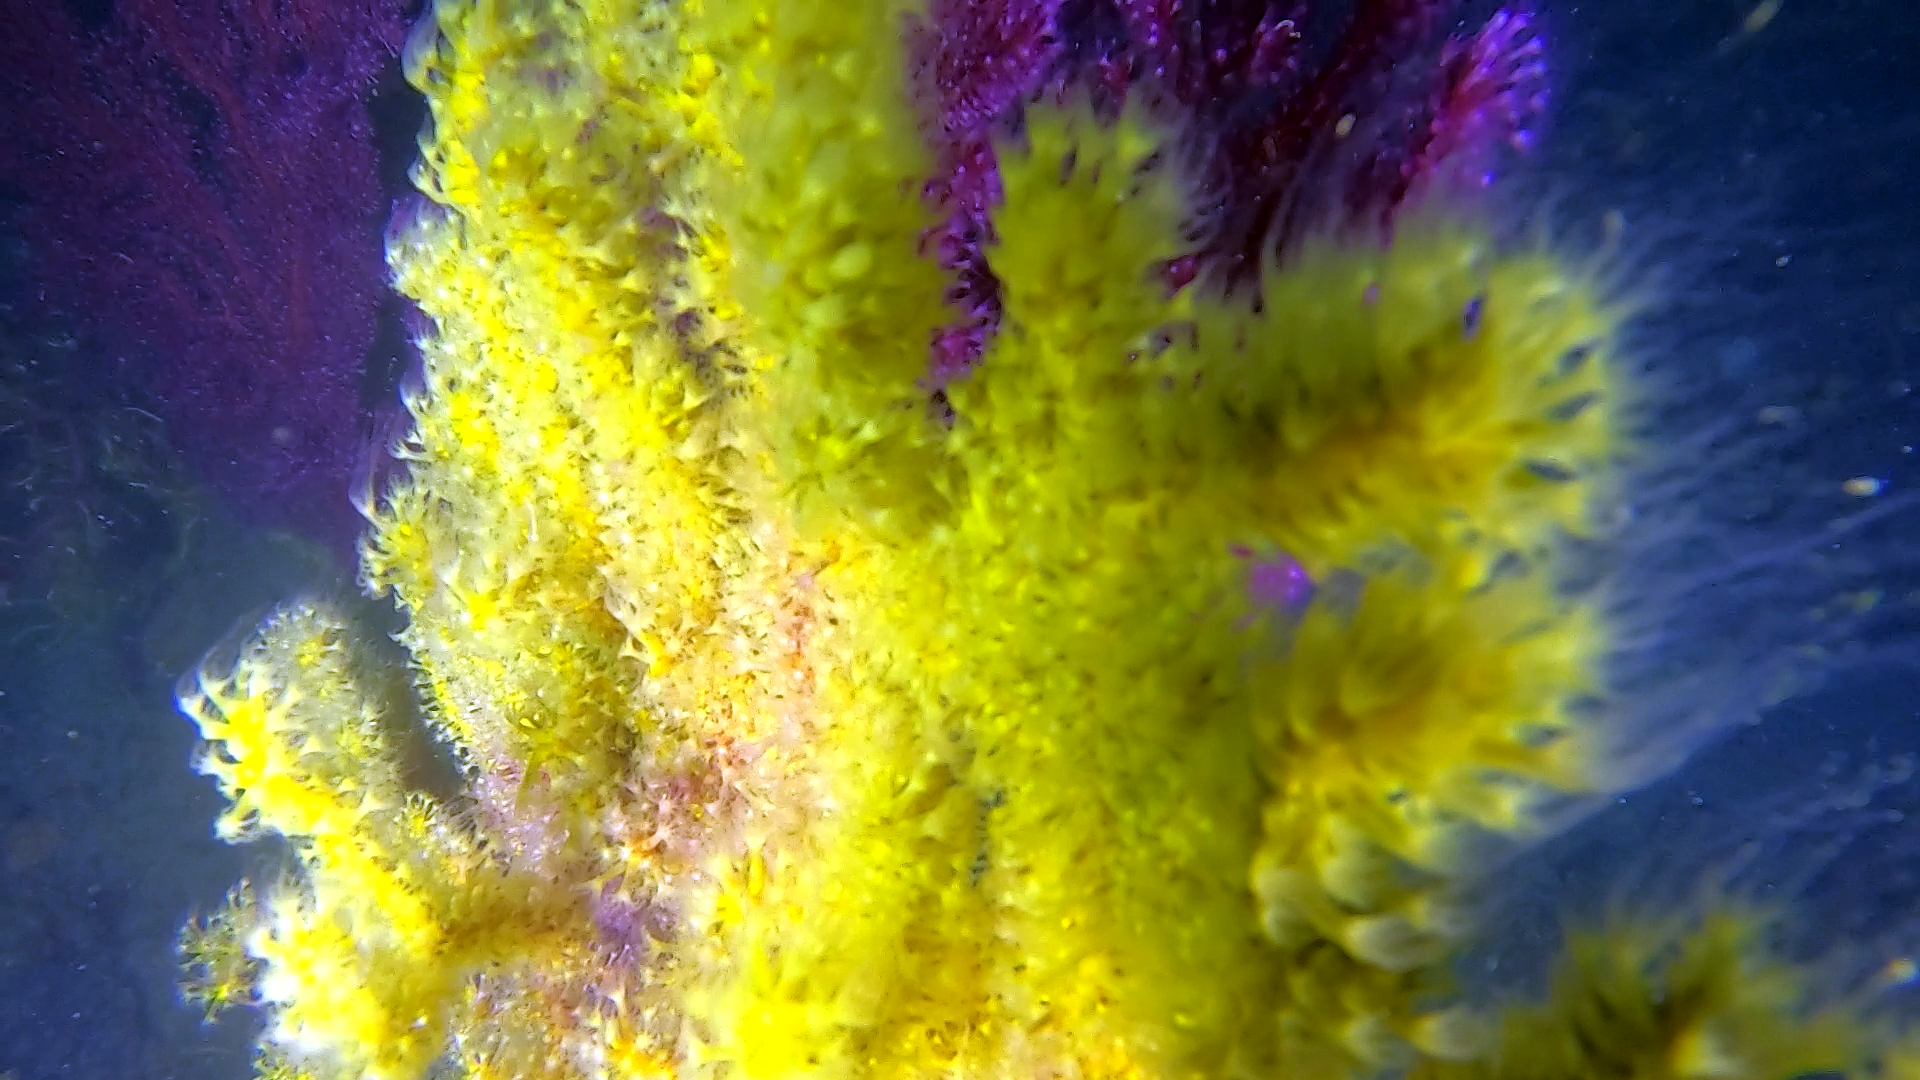 Rilascio dei gameti di Savalia savaglia - Release of gametes of Gold coral - intotheblue.it